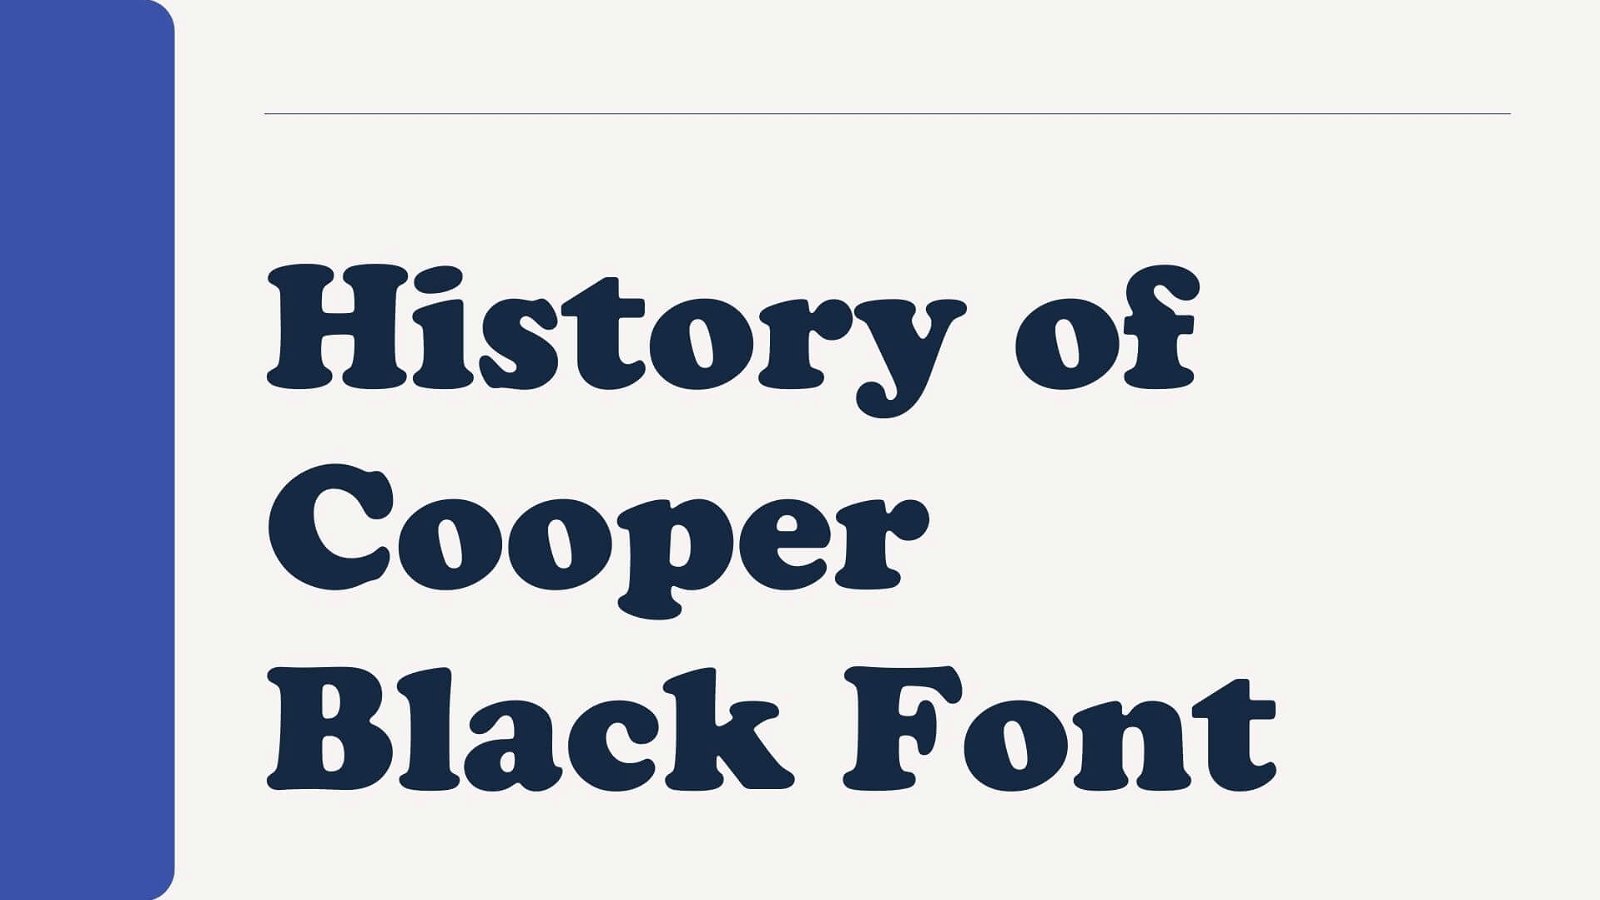 History of Cooper Black Font